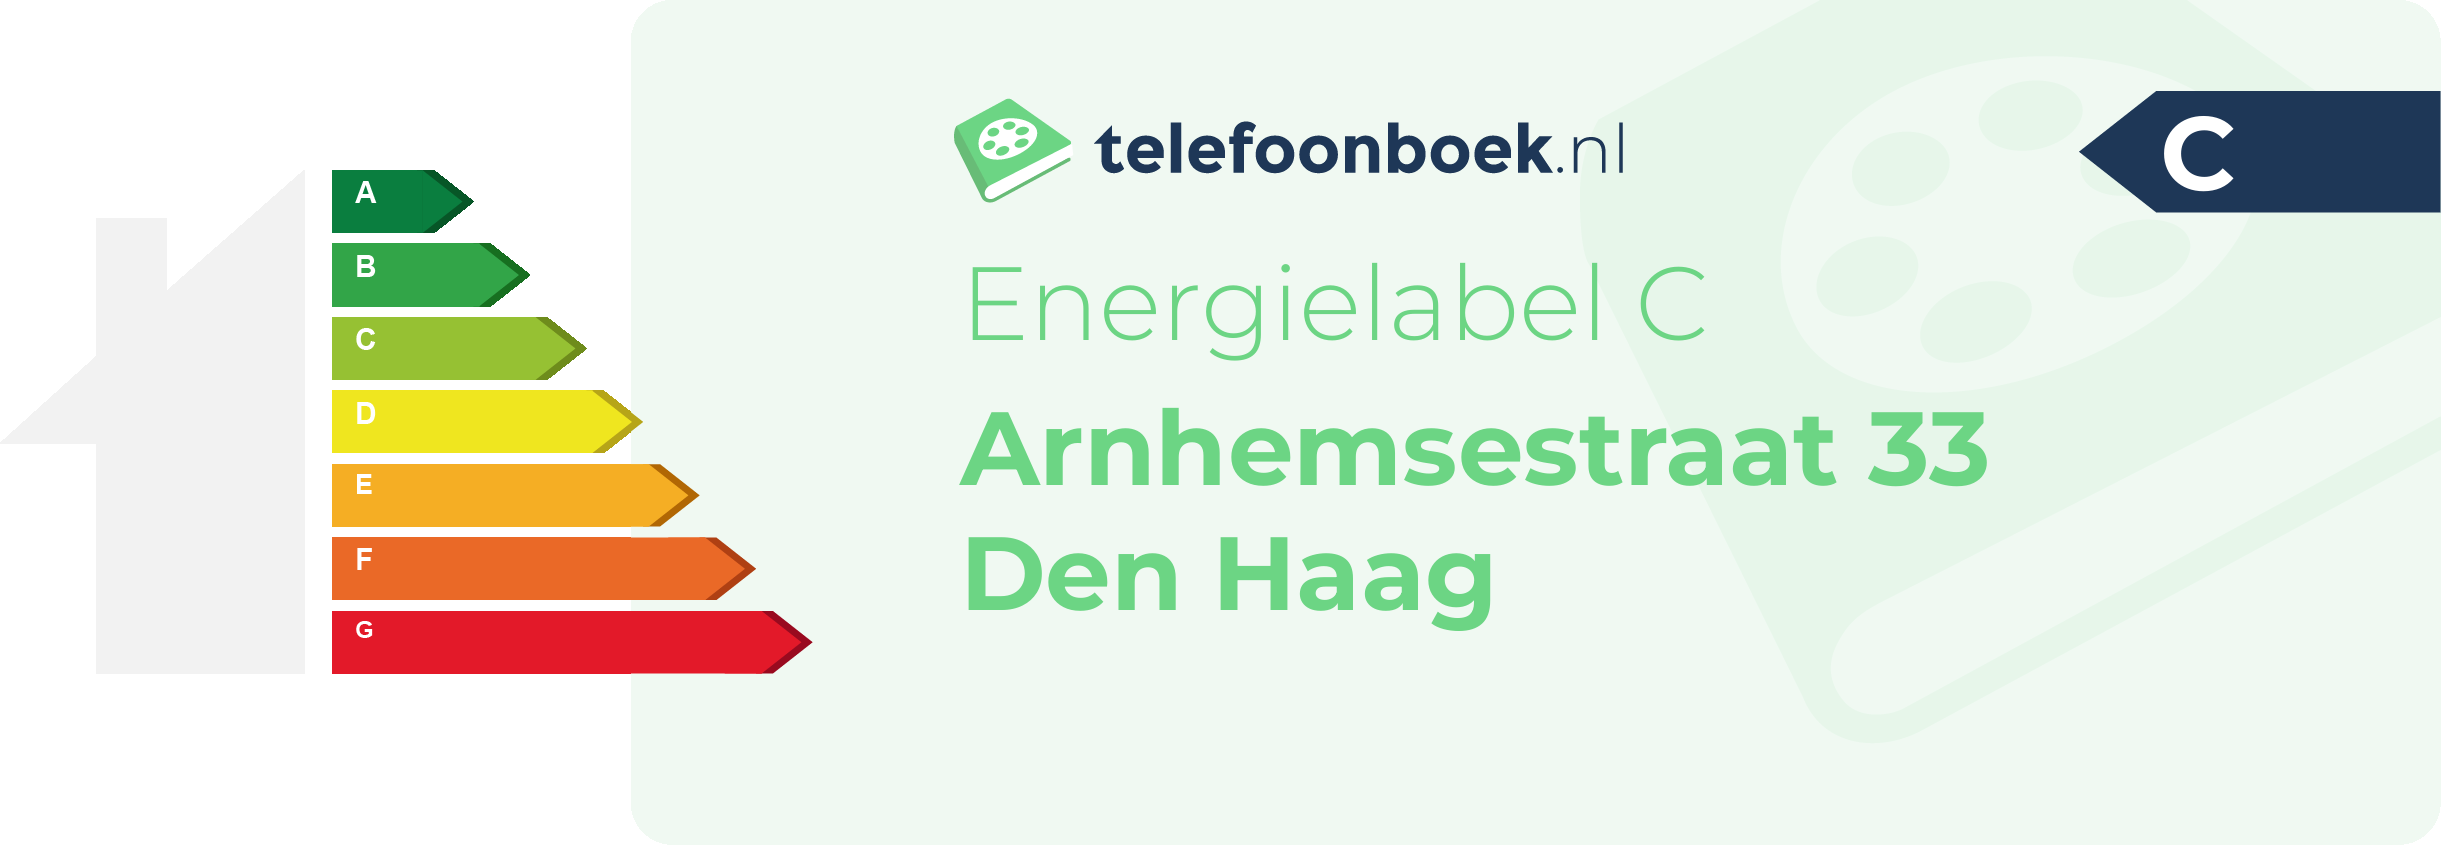 Energielabel Arnhemsestraat 33 Den Haag